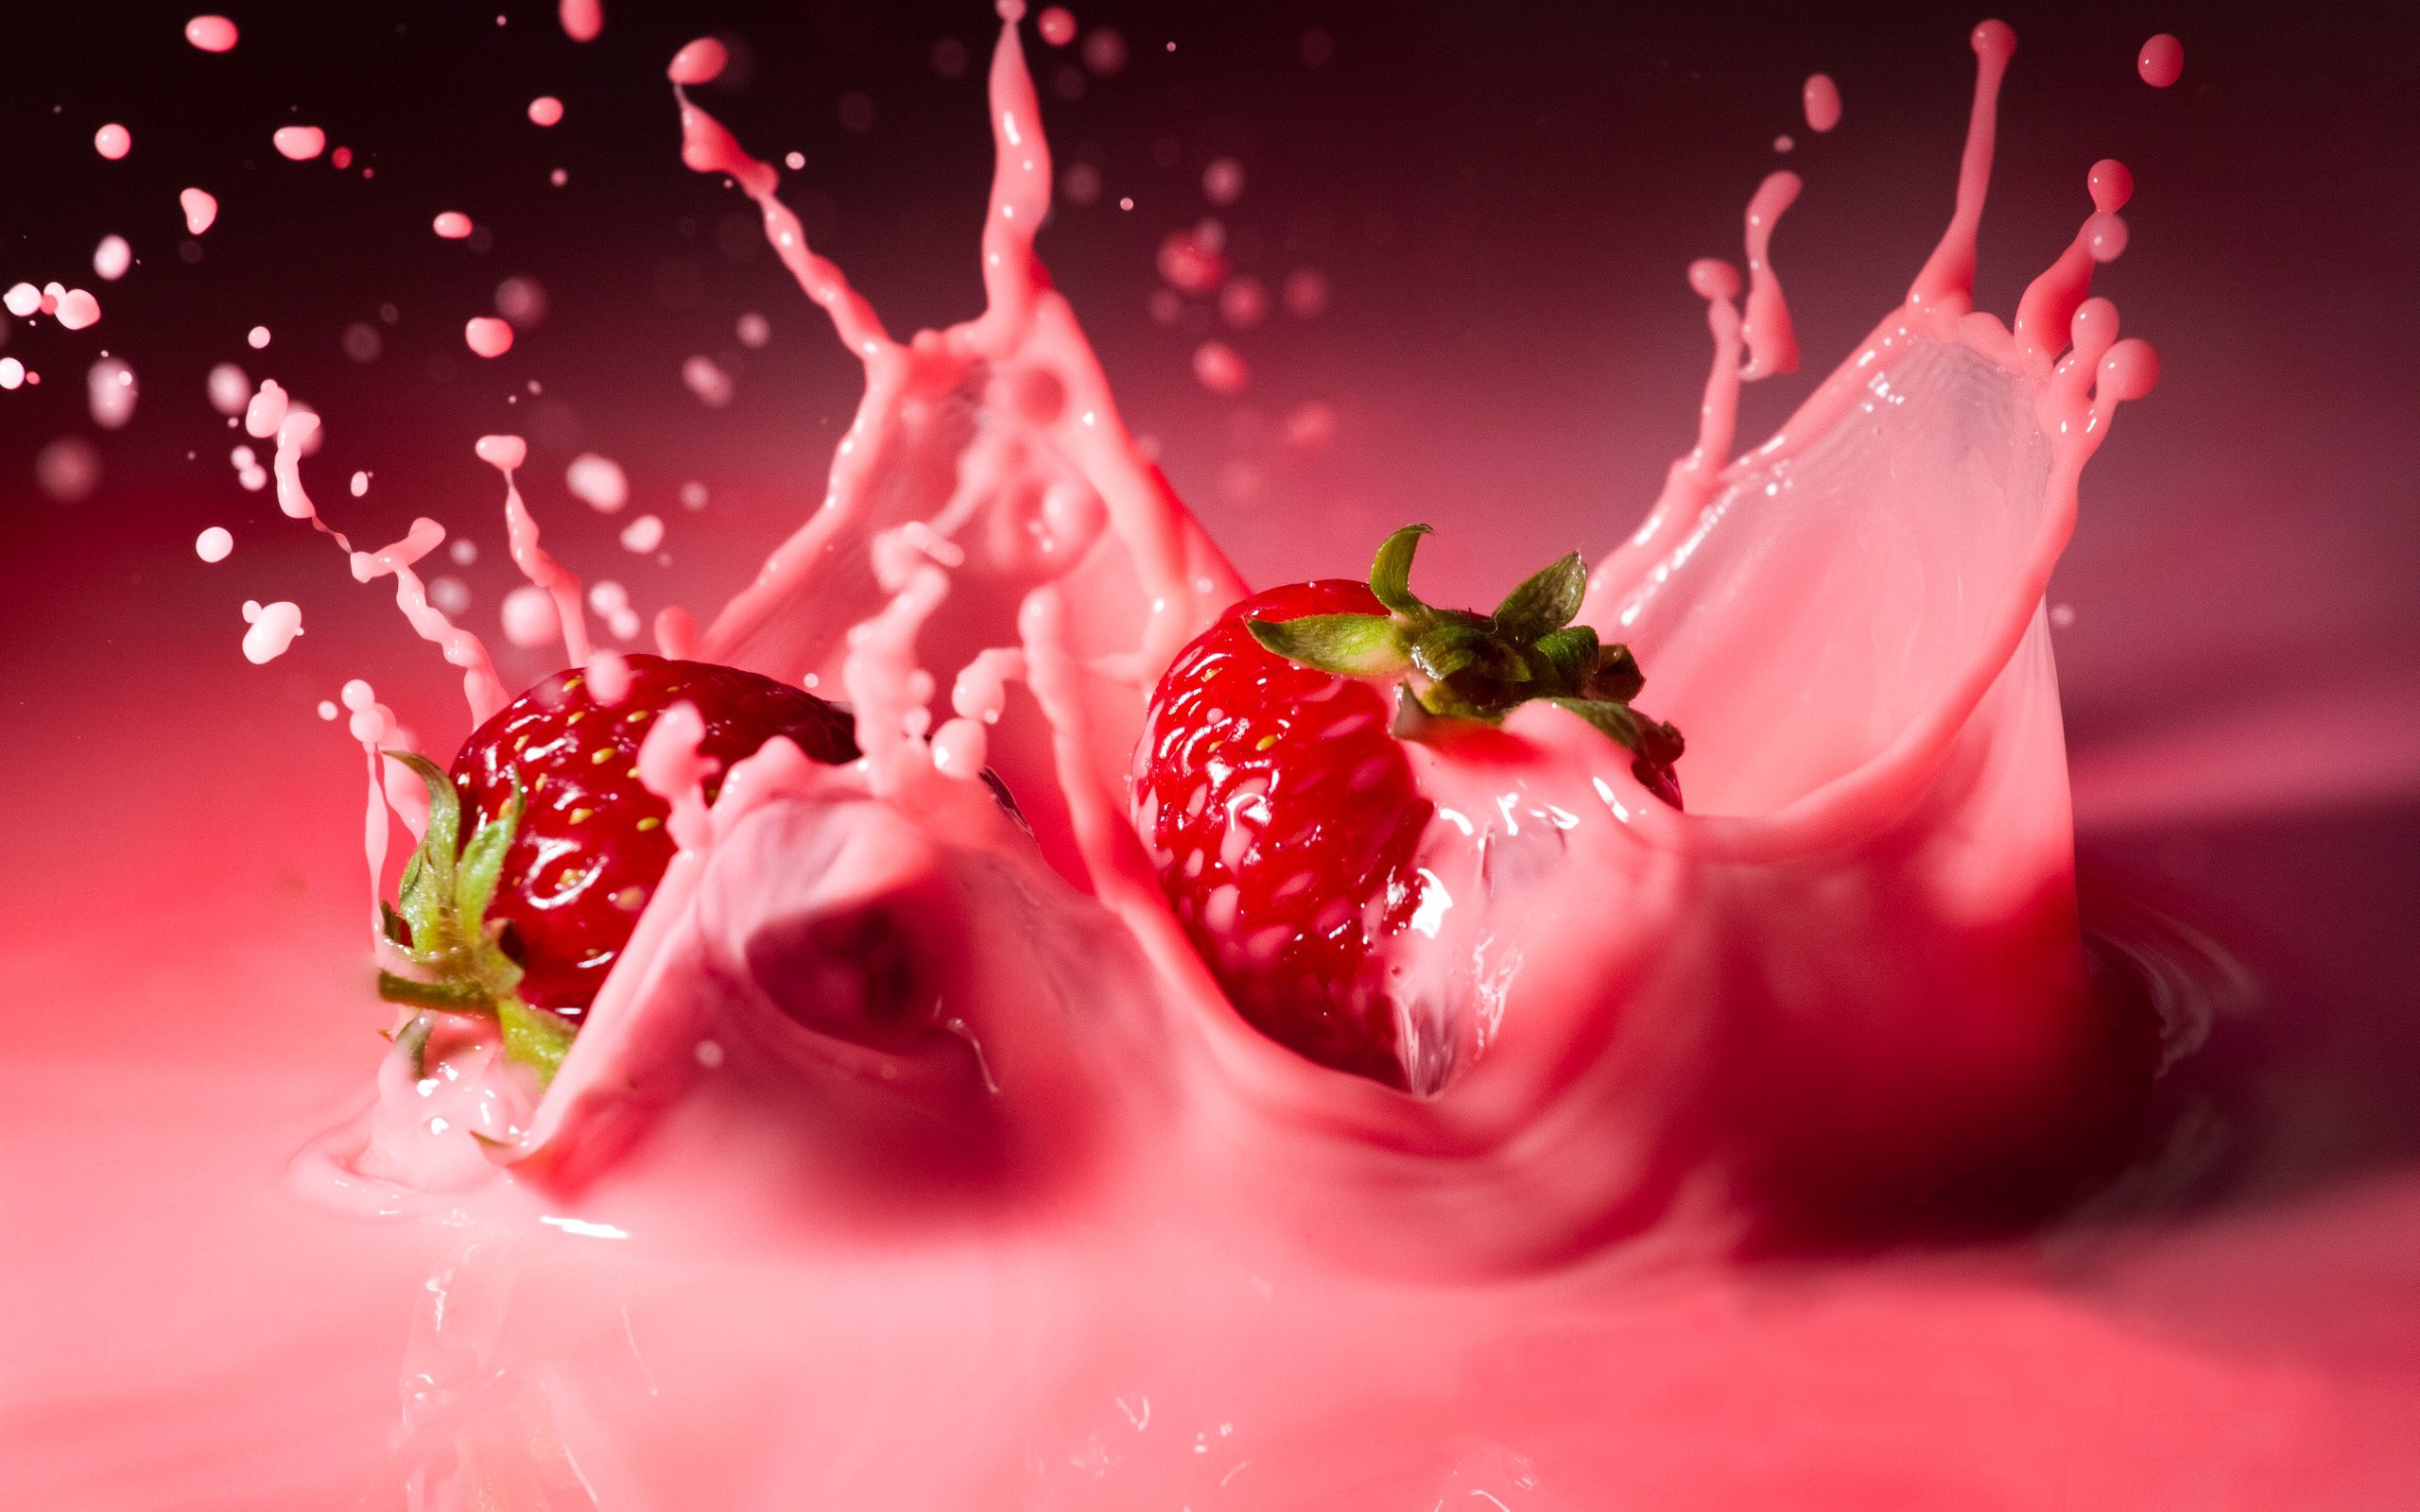 Erdbeeren in der Milch